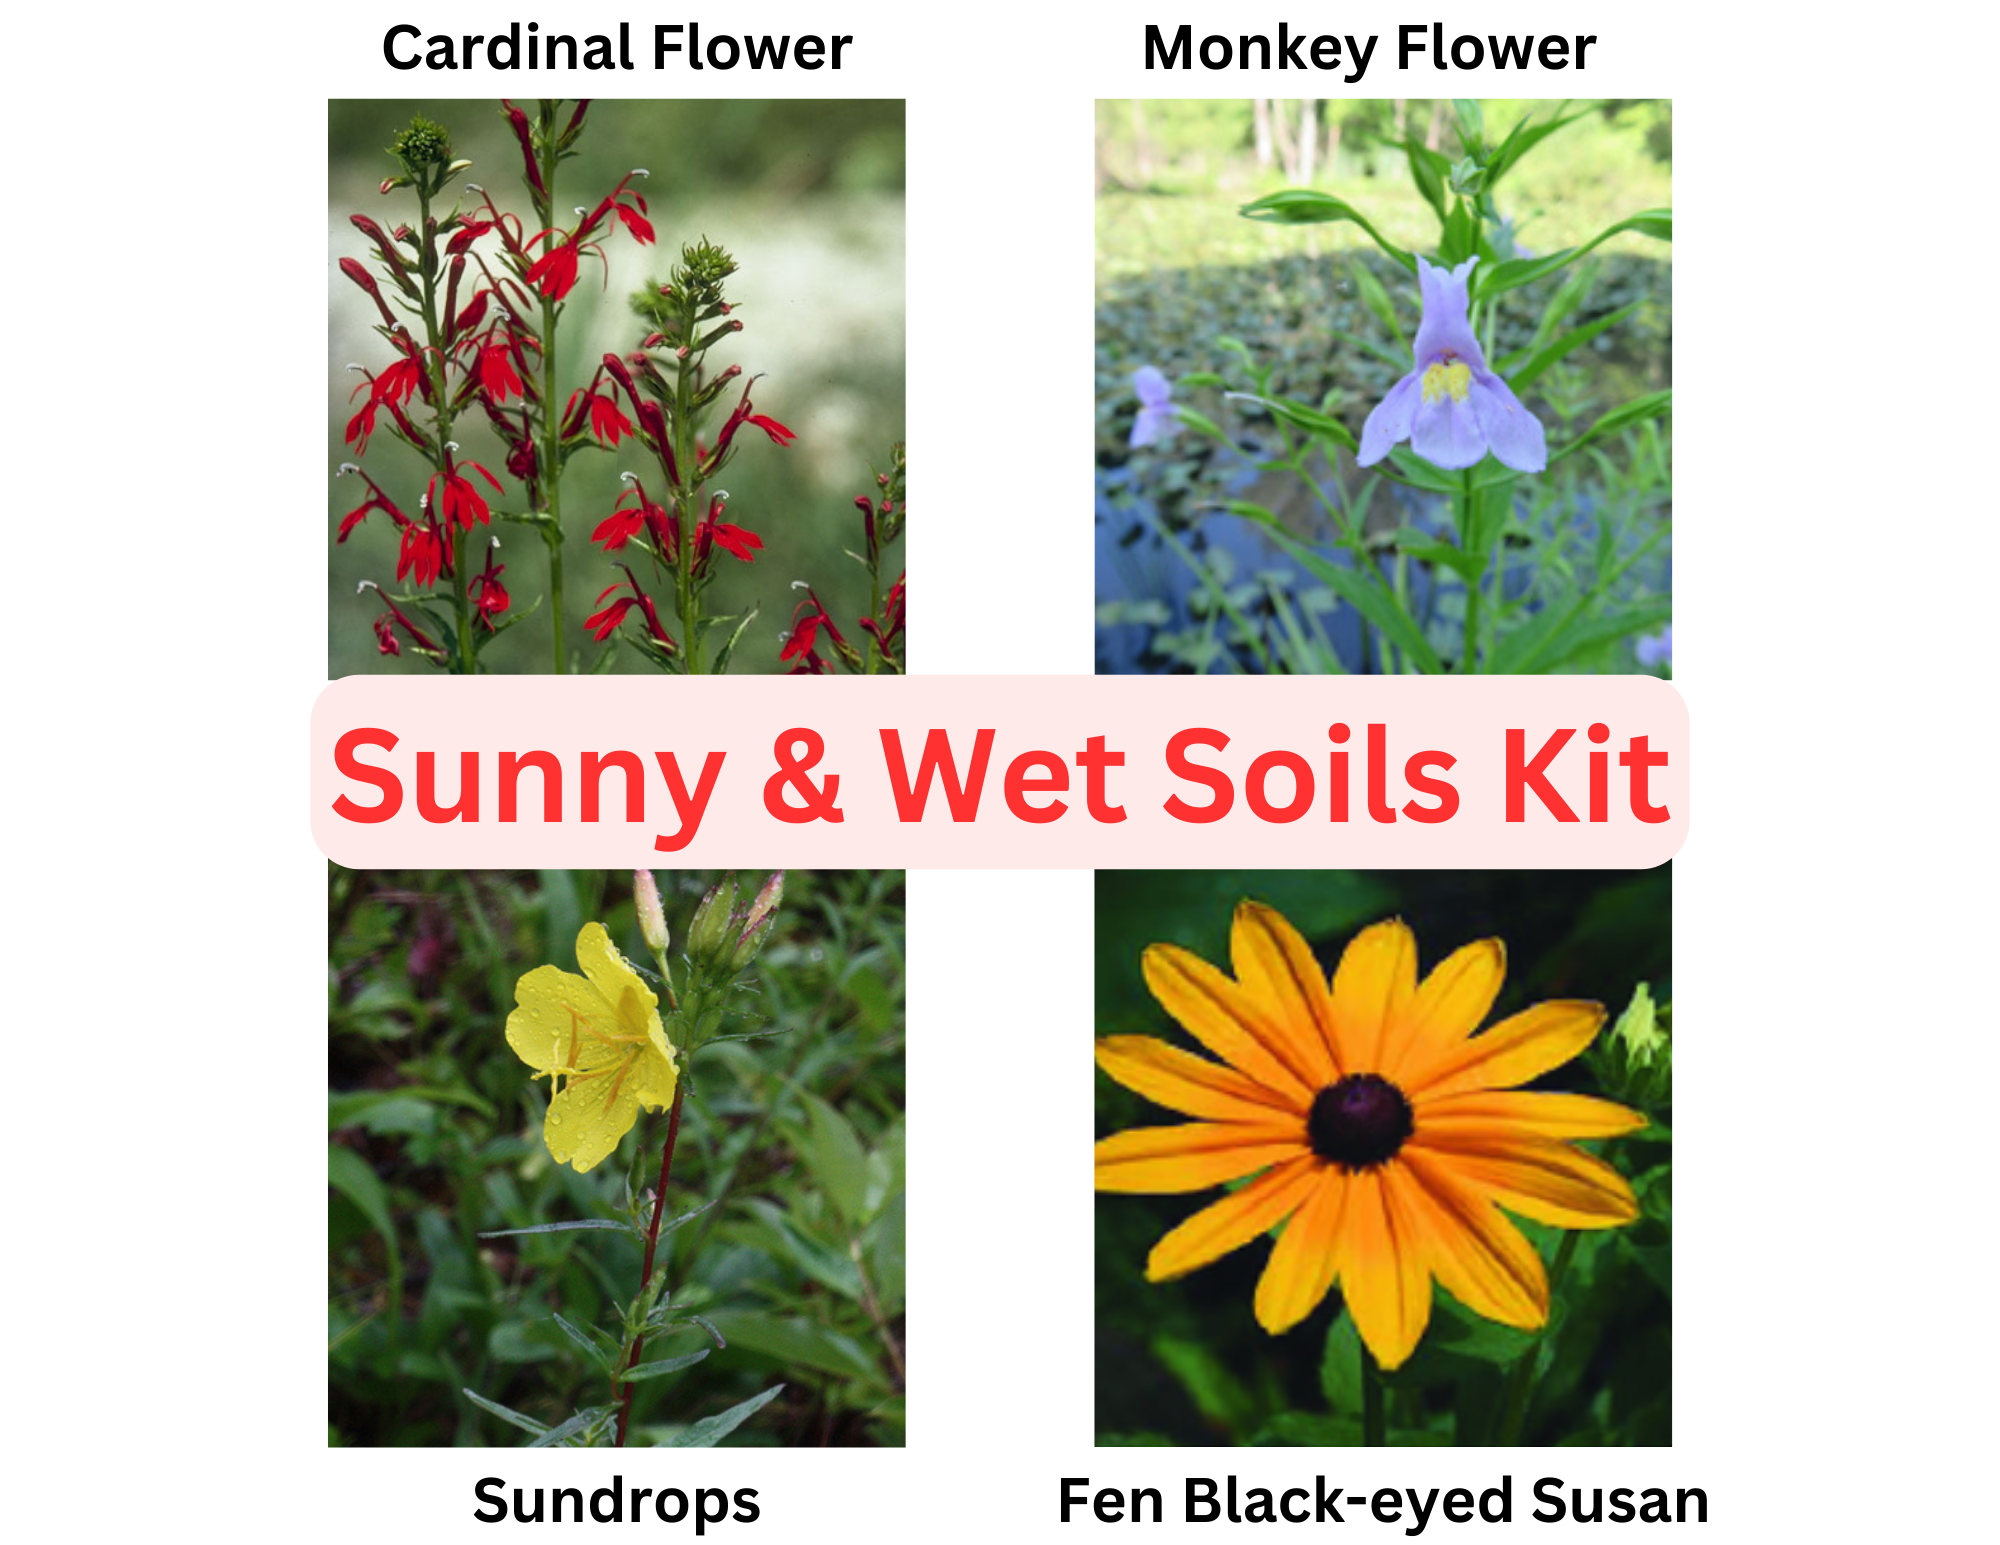 Sunny and Wet Soils Kit